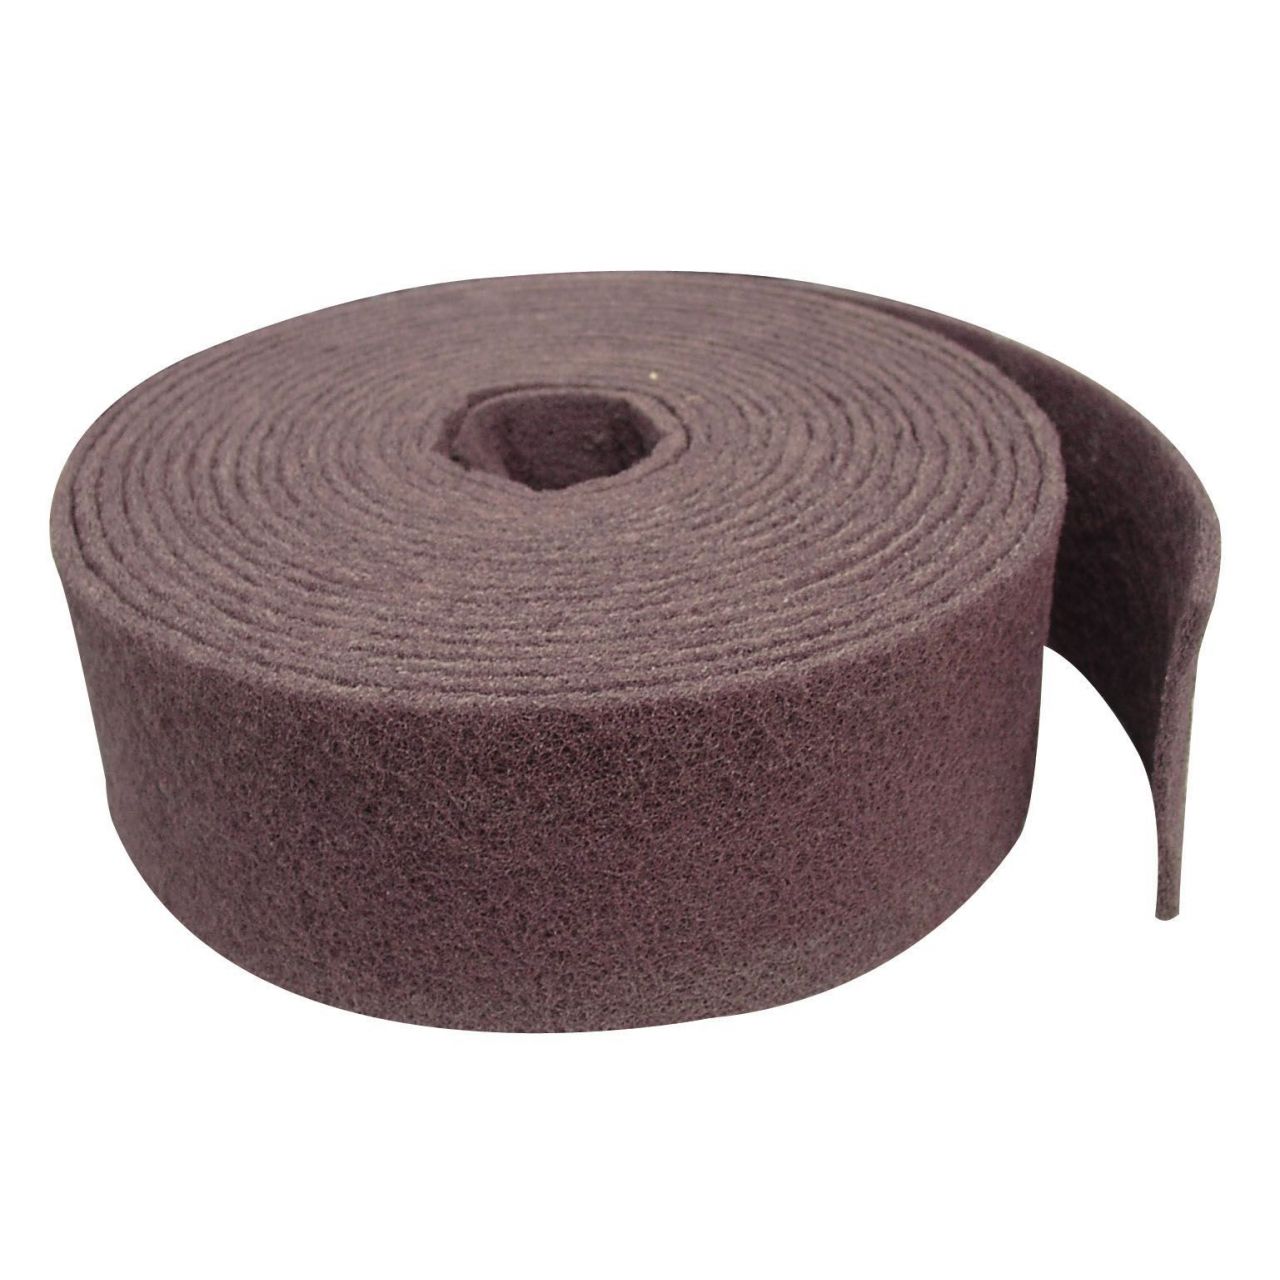 Rollos fibra abrasiva sin tejer calidad profesional (Ancho 120 mm; Largo 10.000 mm; Grano UF-500/600)